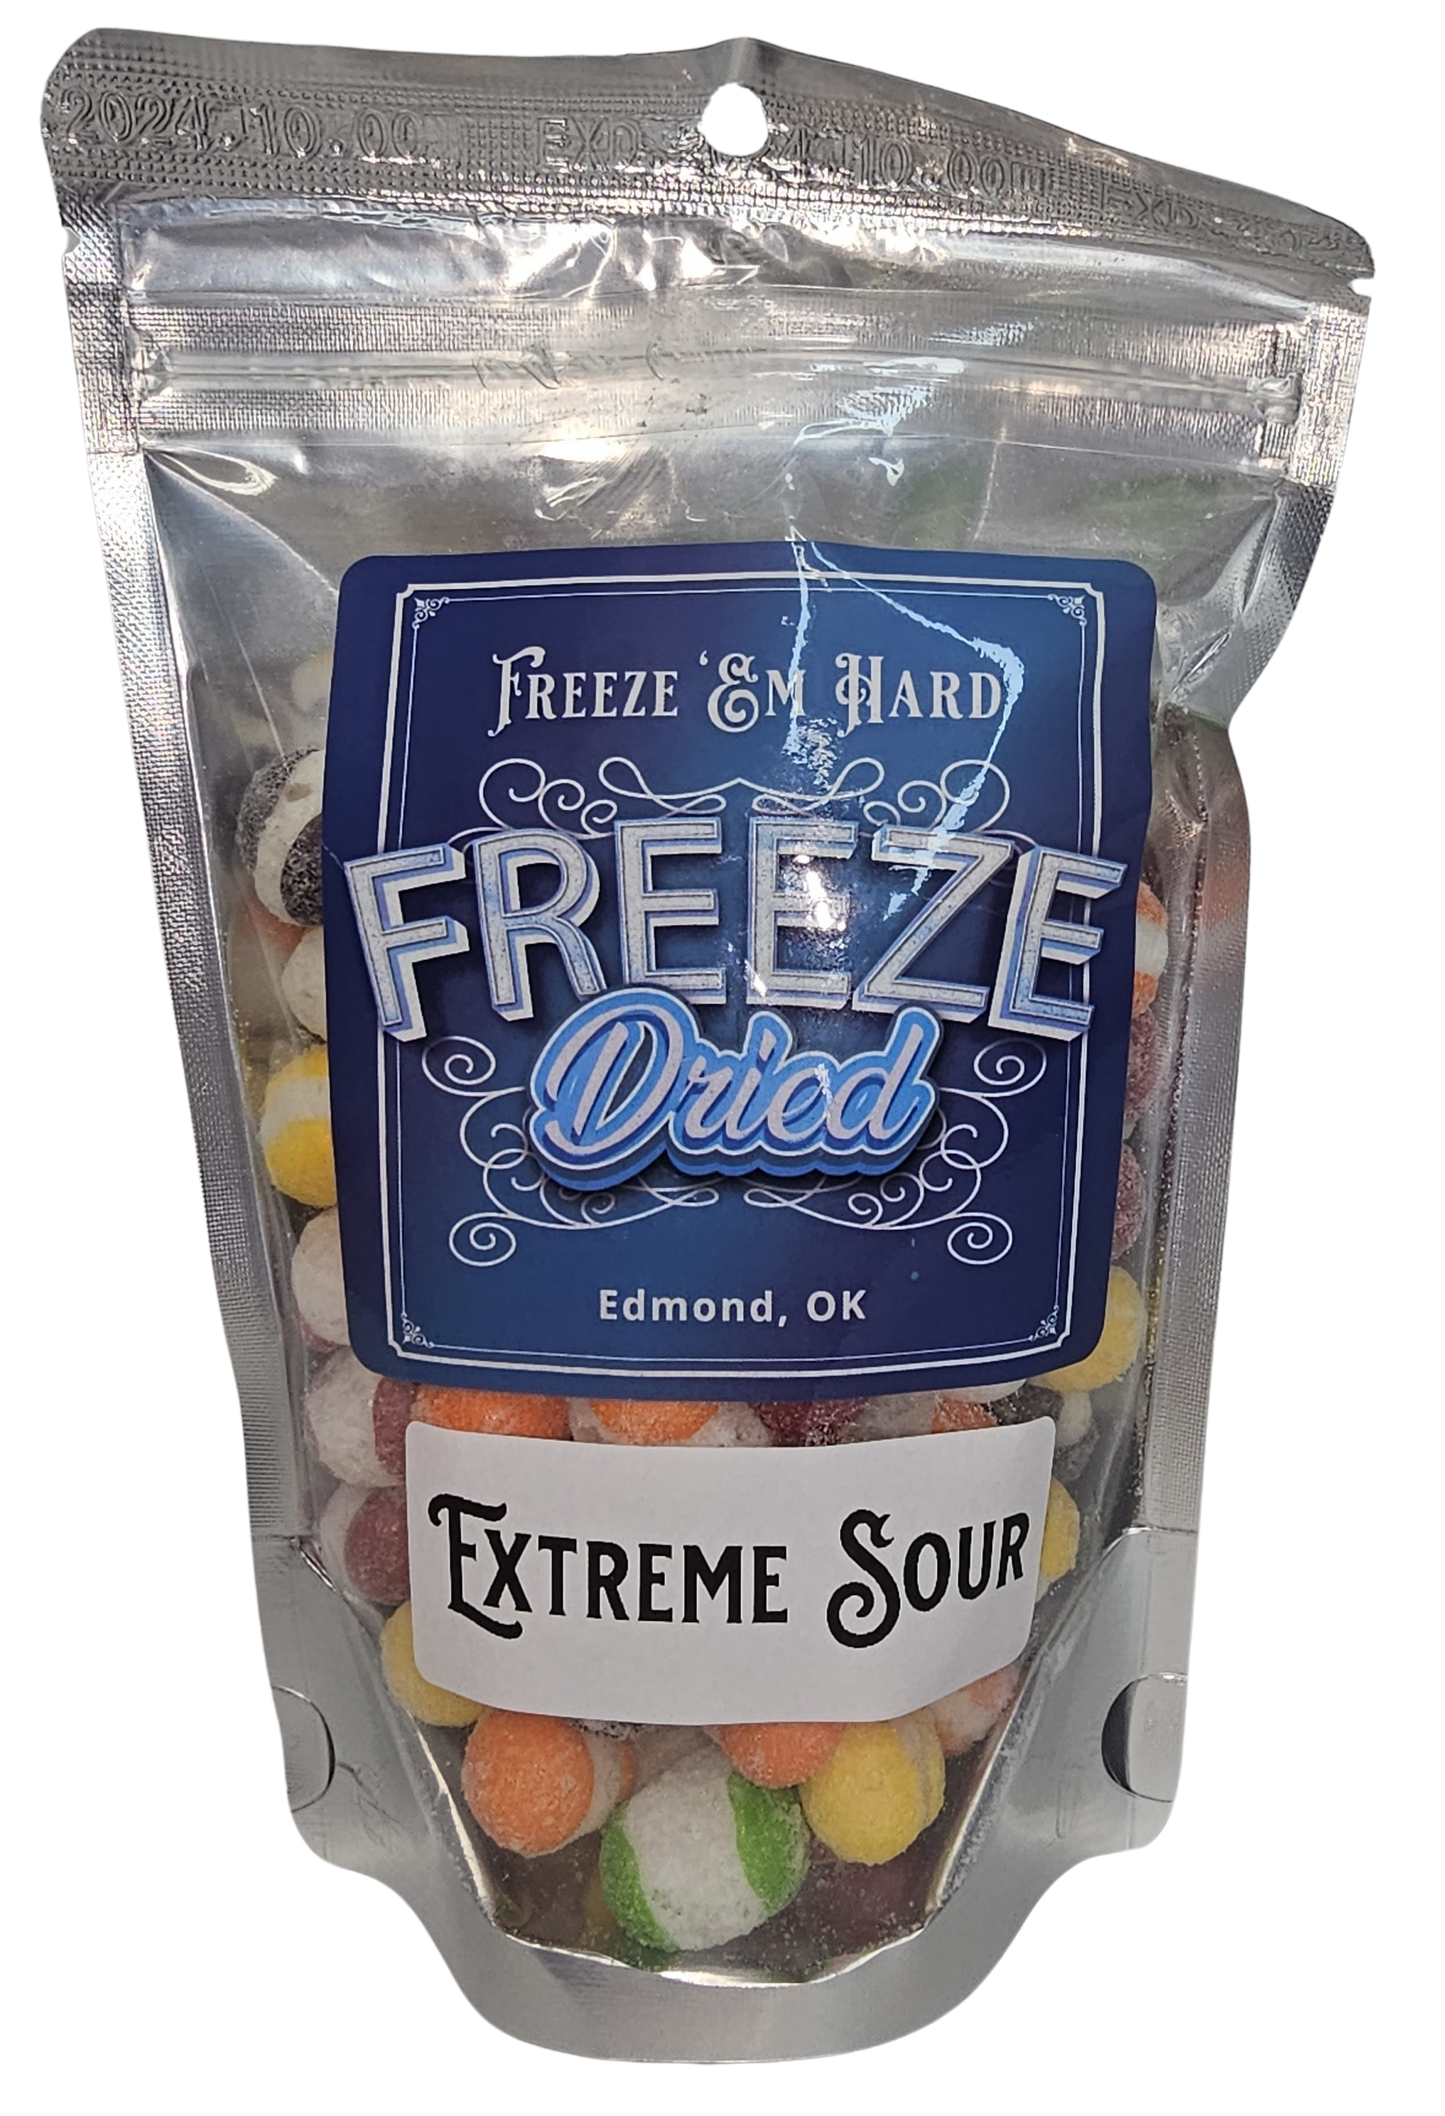 4oz Bag - EXTREME SOUR Freeze Dried Fruit Flavored Crunch - Freeze Em Hard